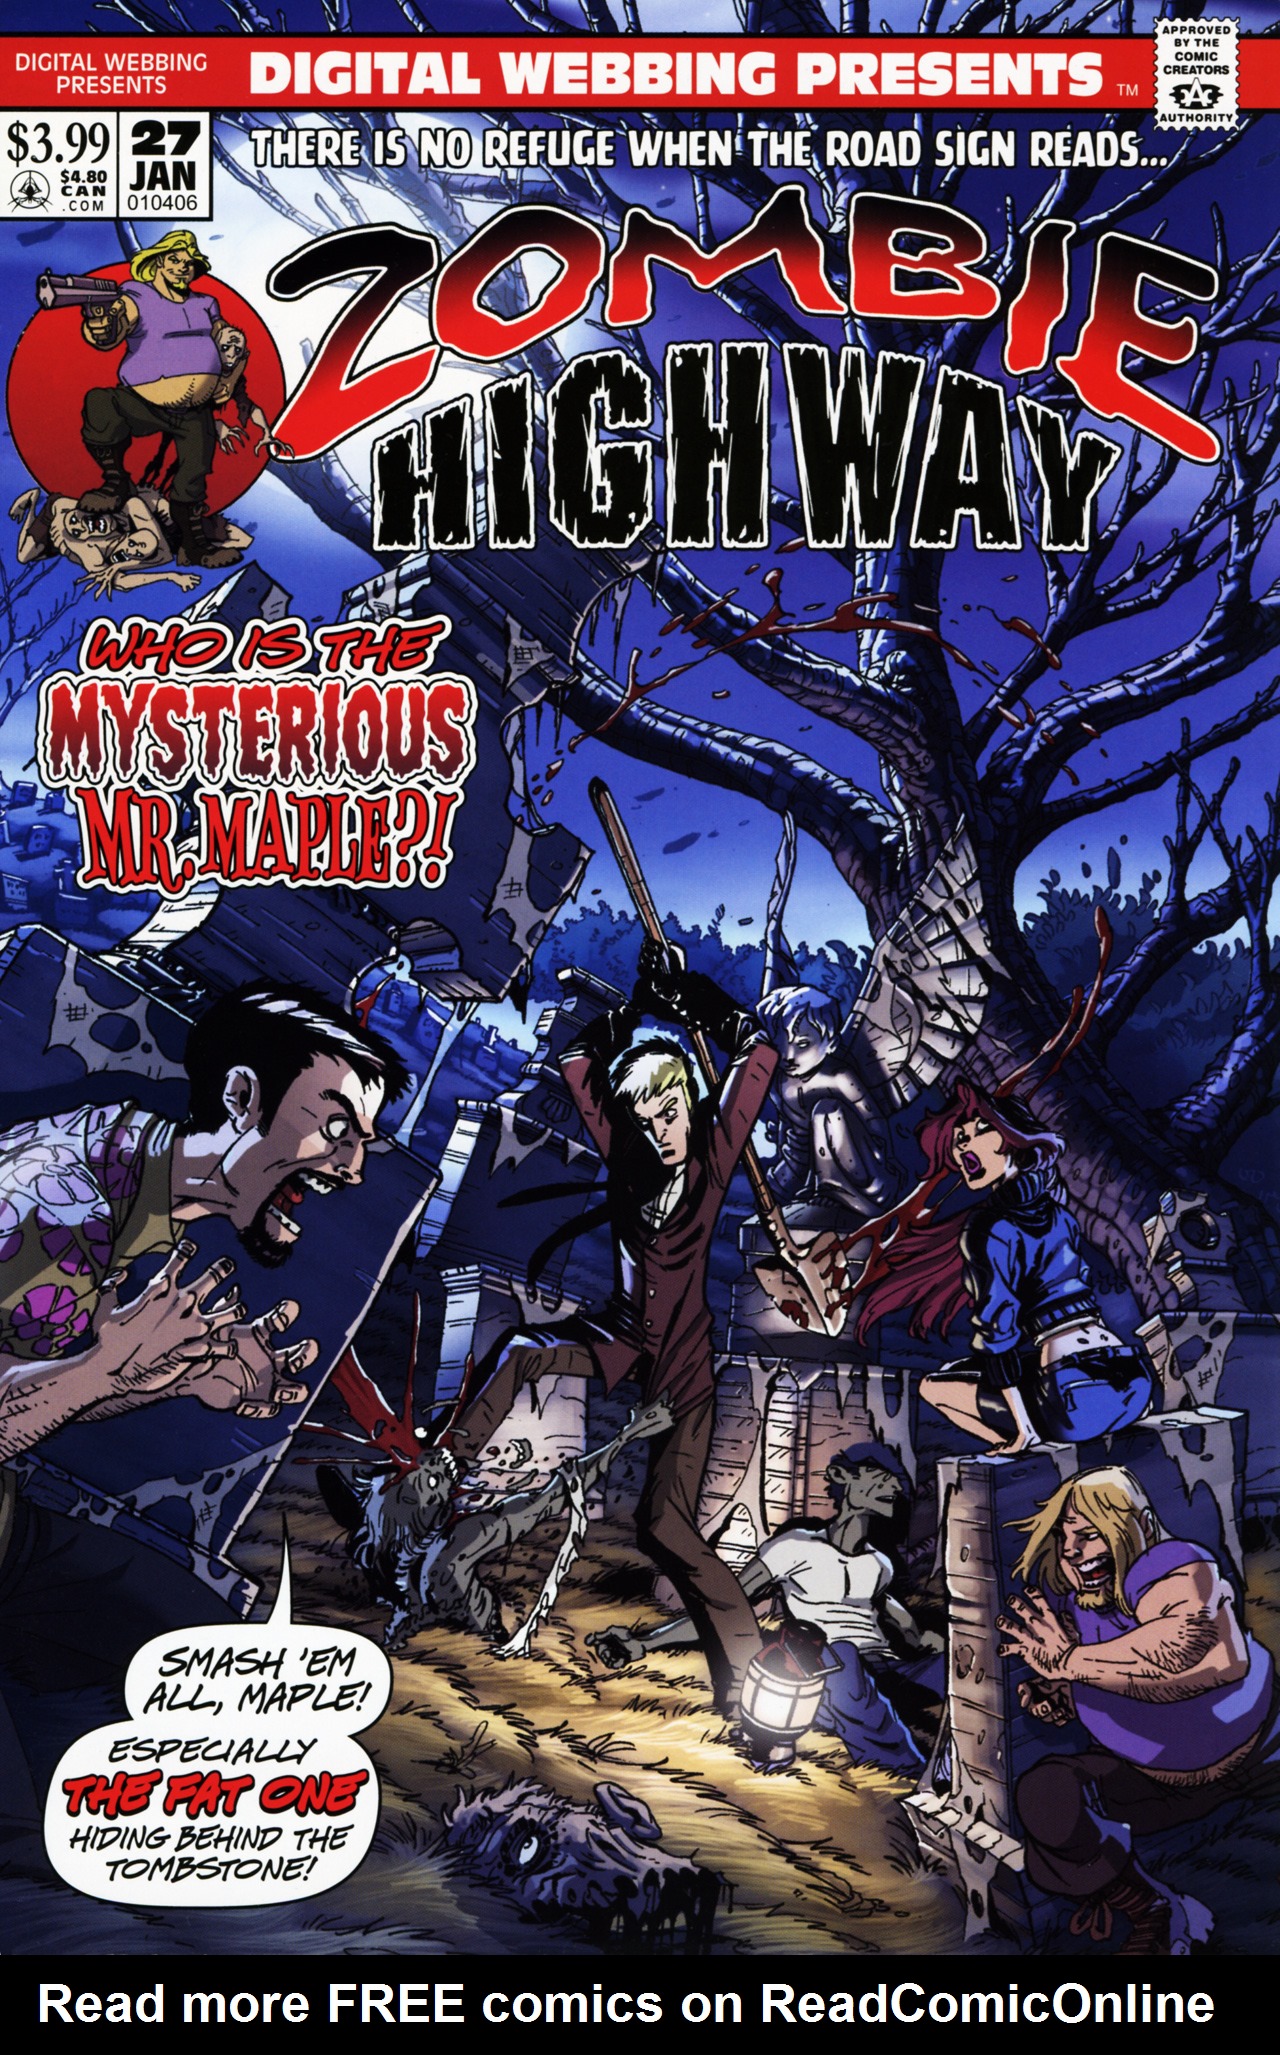 Read online Digital Webbing Presents comic -  Issue #27 - 1